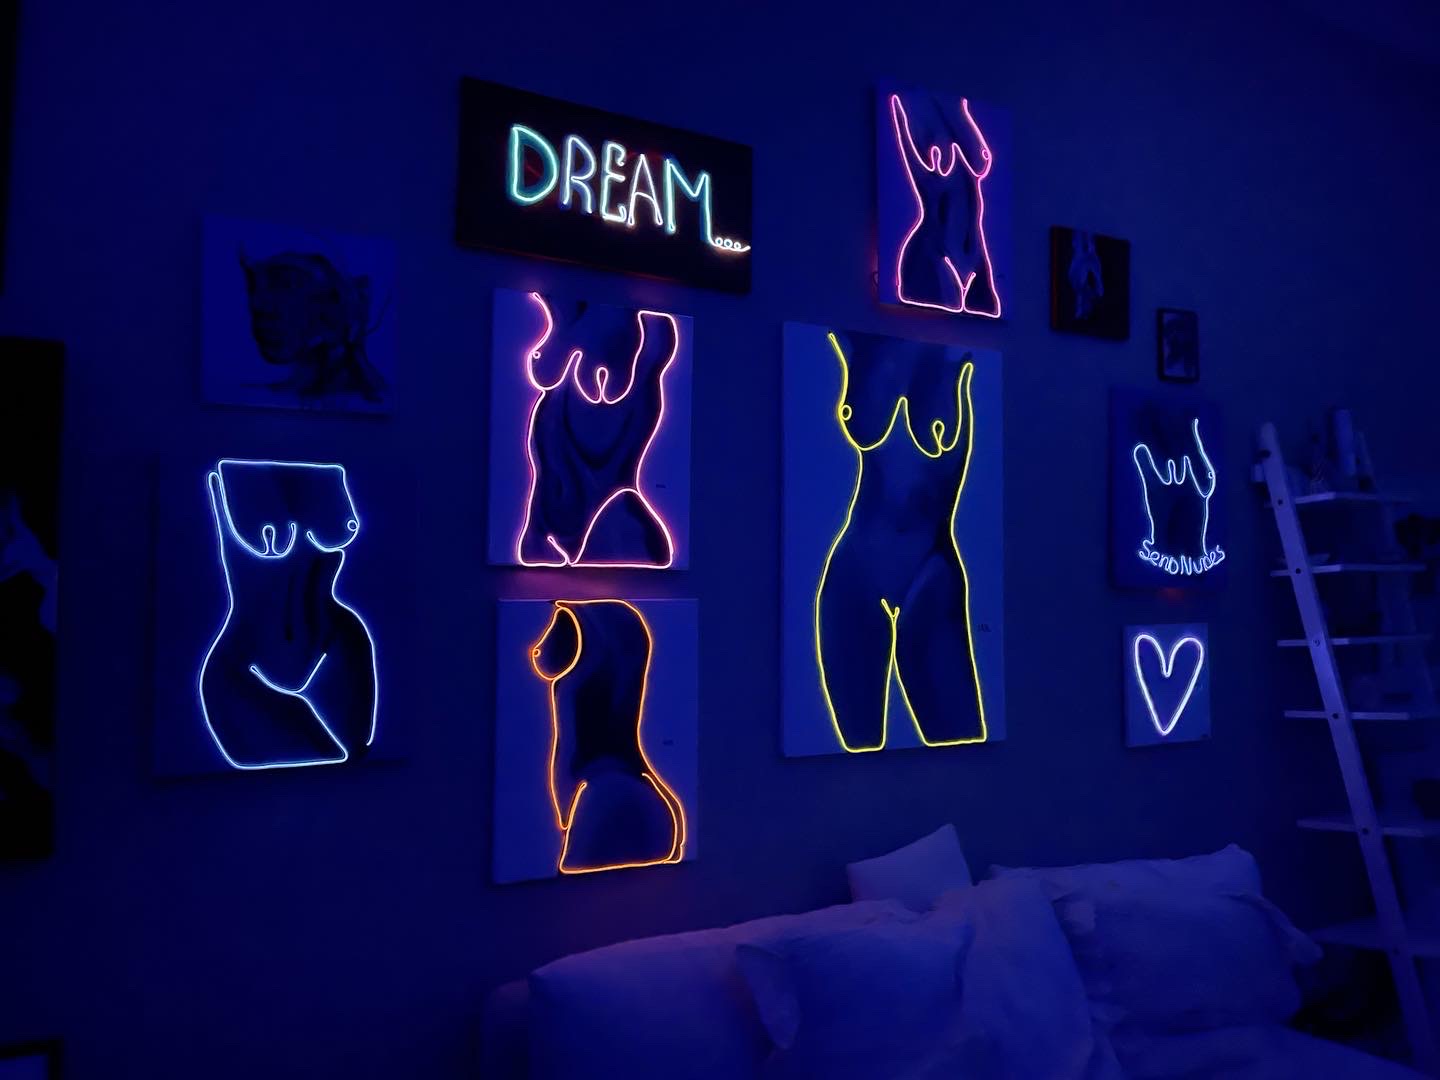 “Dream” Neon sign art